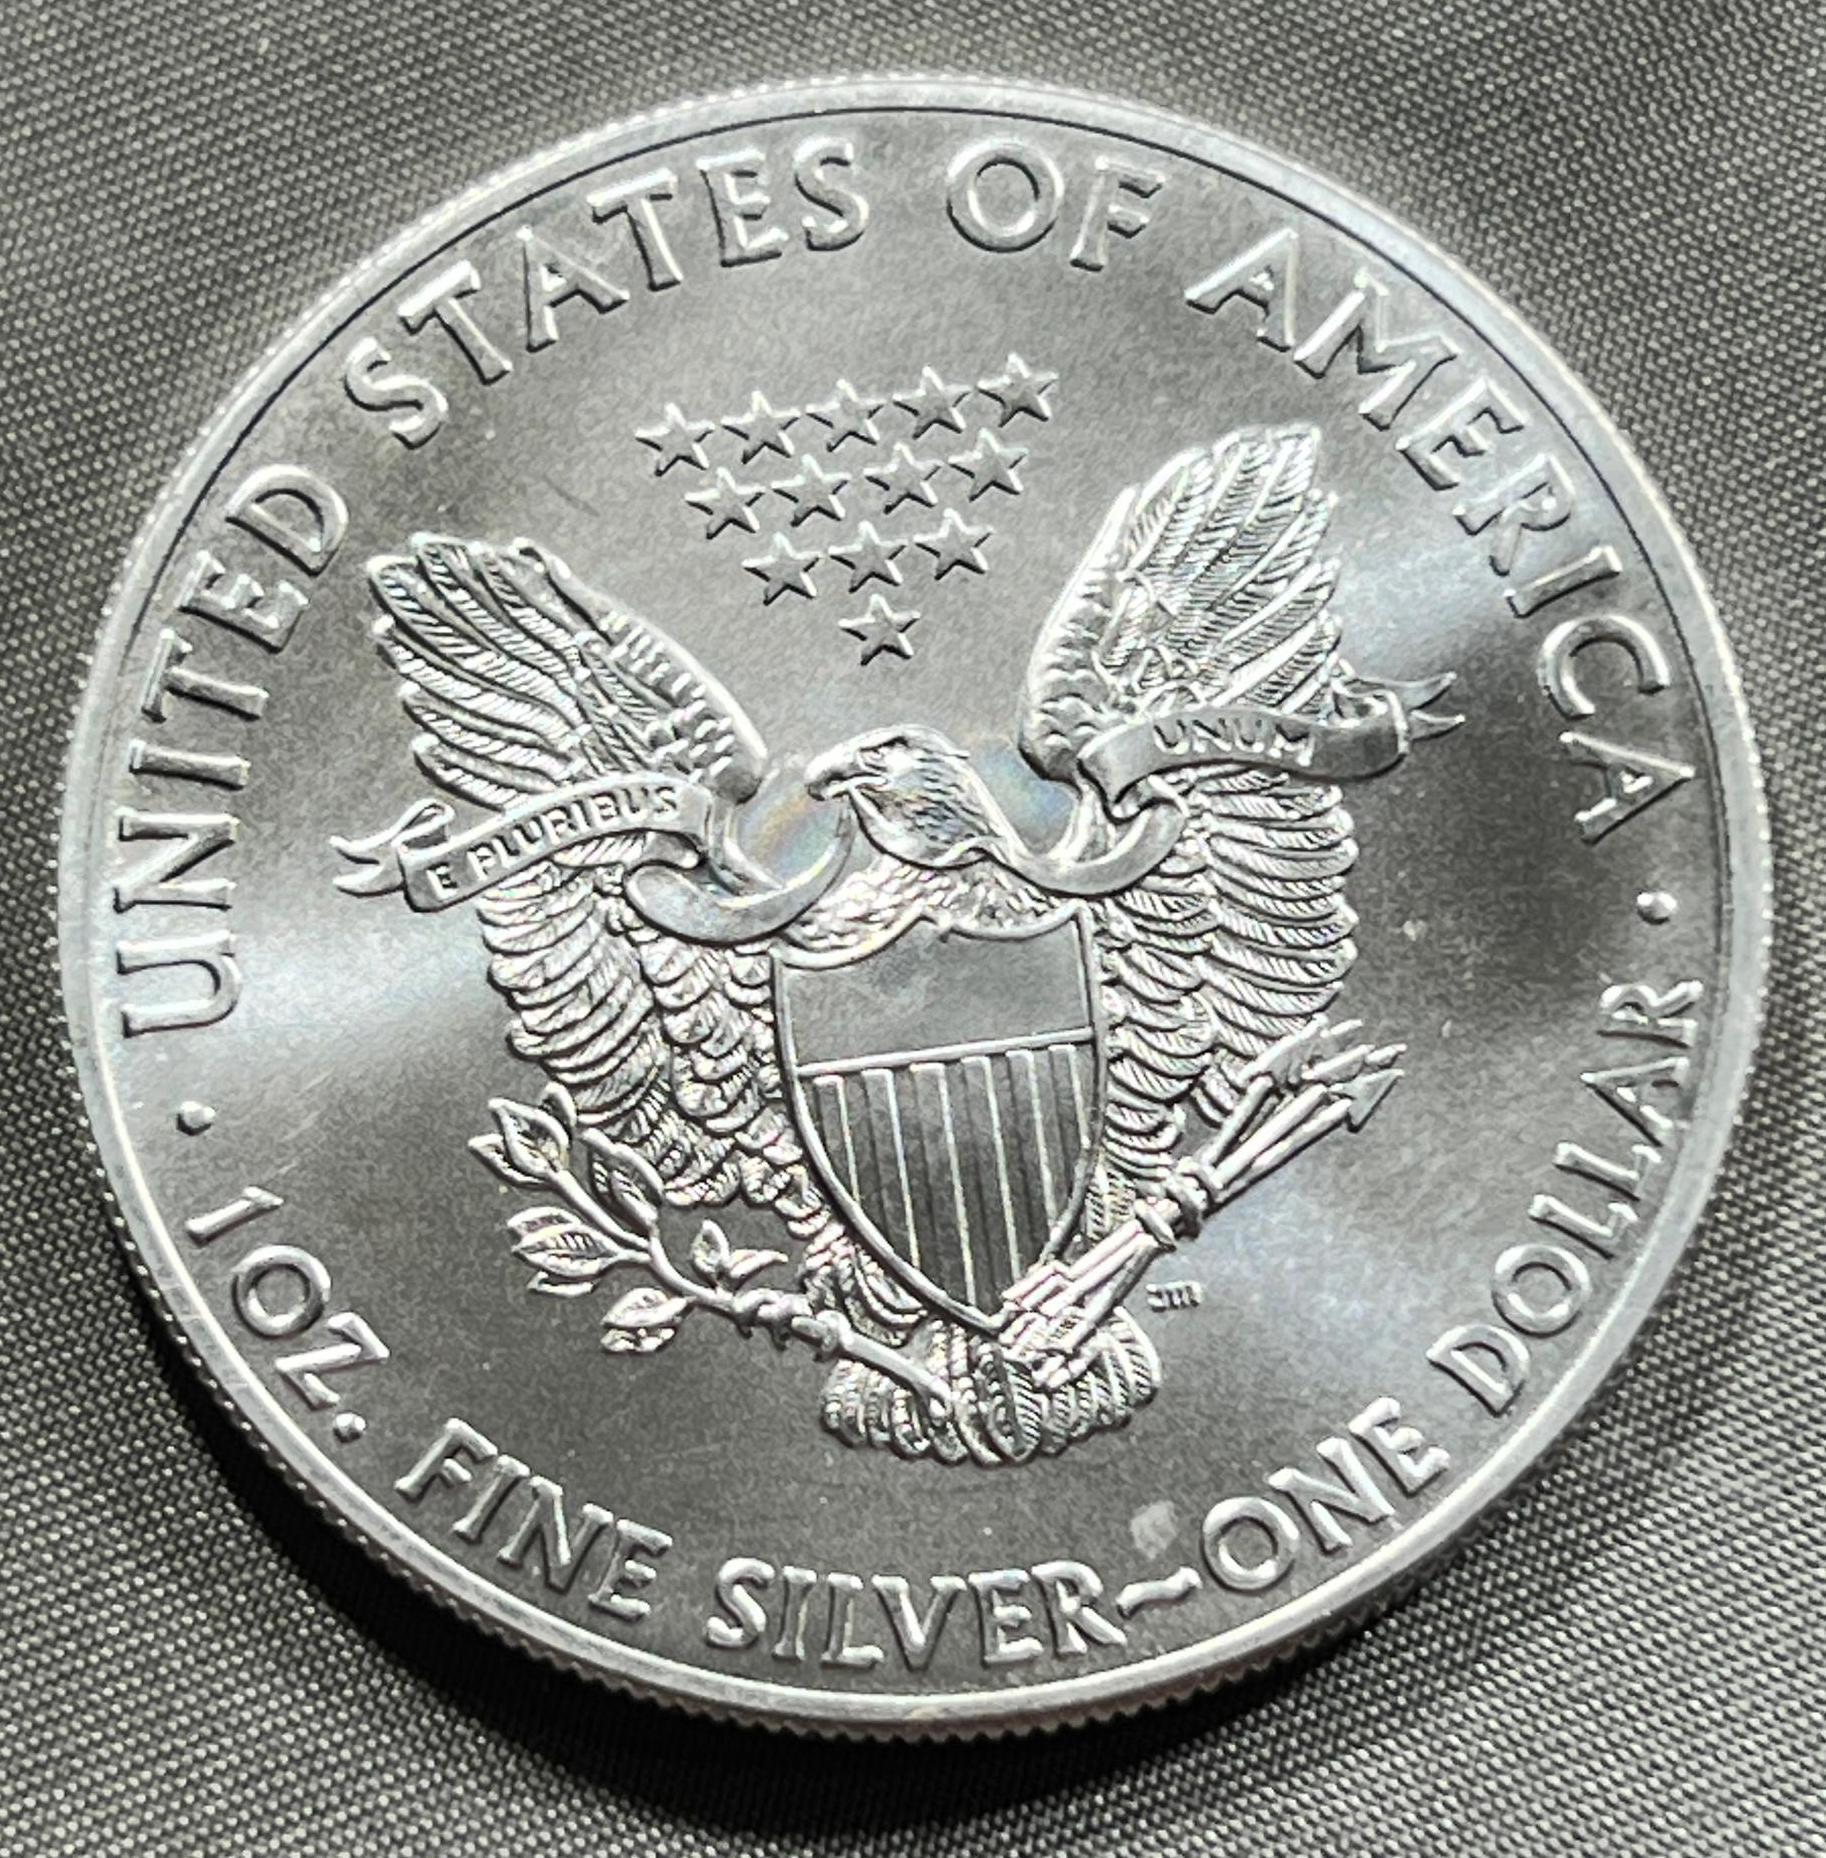 2014 US Silver Eagle Dollar Coin, .999 Fine Silver